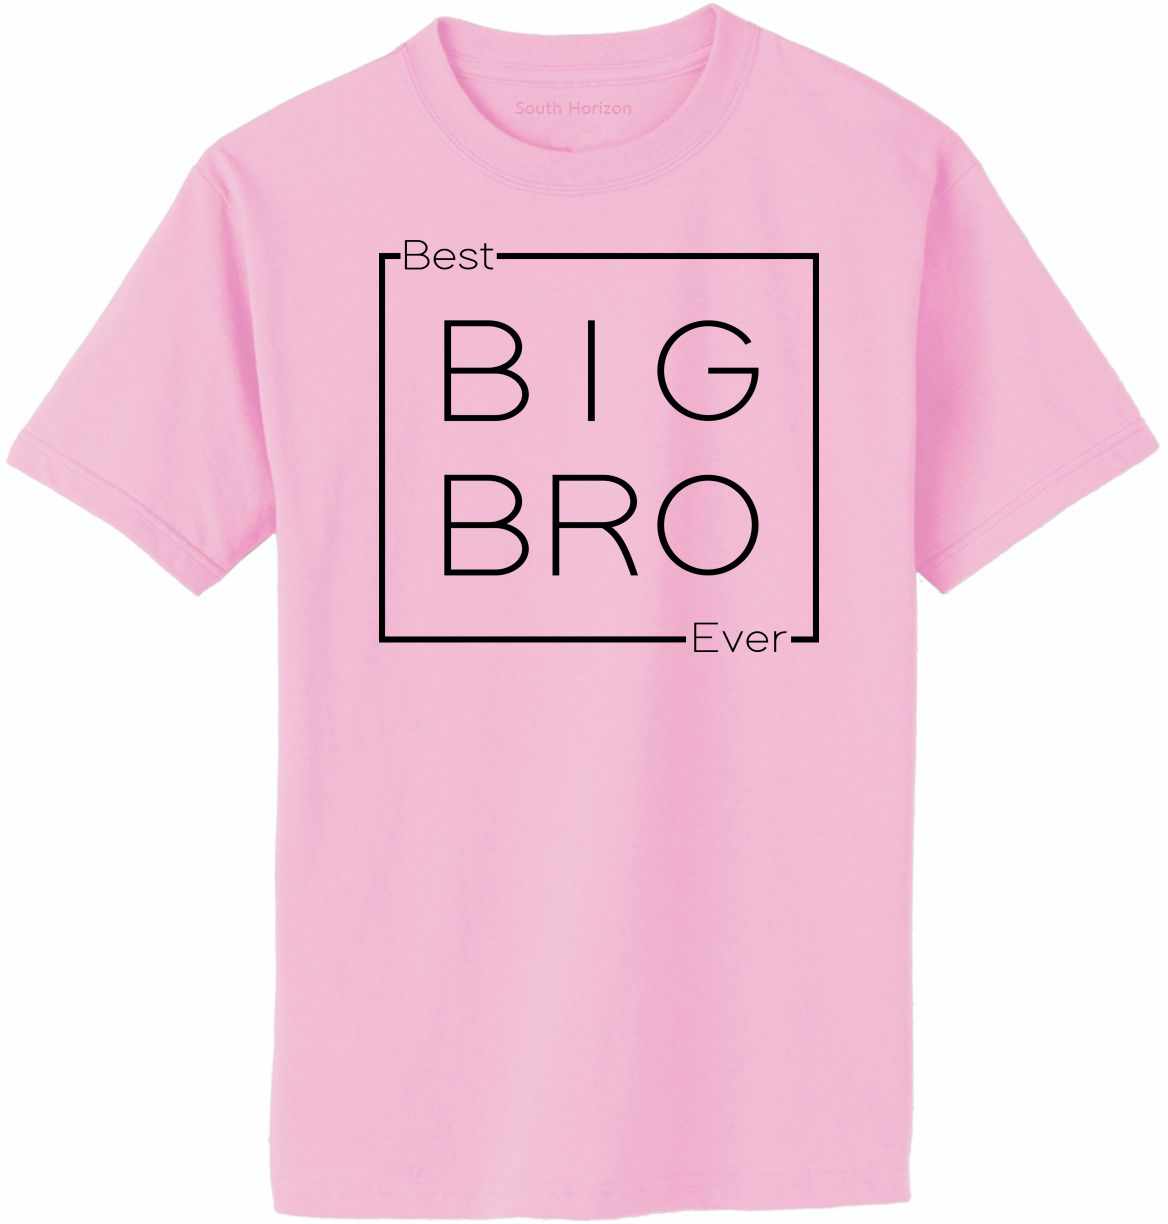 Best Big Bro Ever - Big Brother - Box on Adult T-Shirt (#1339-1)